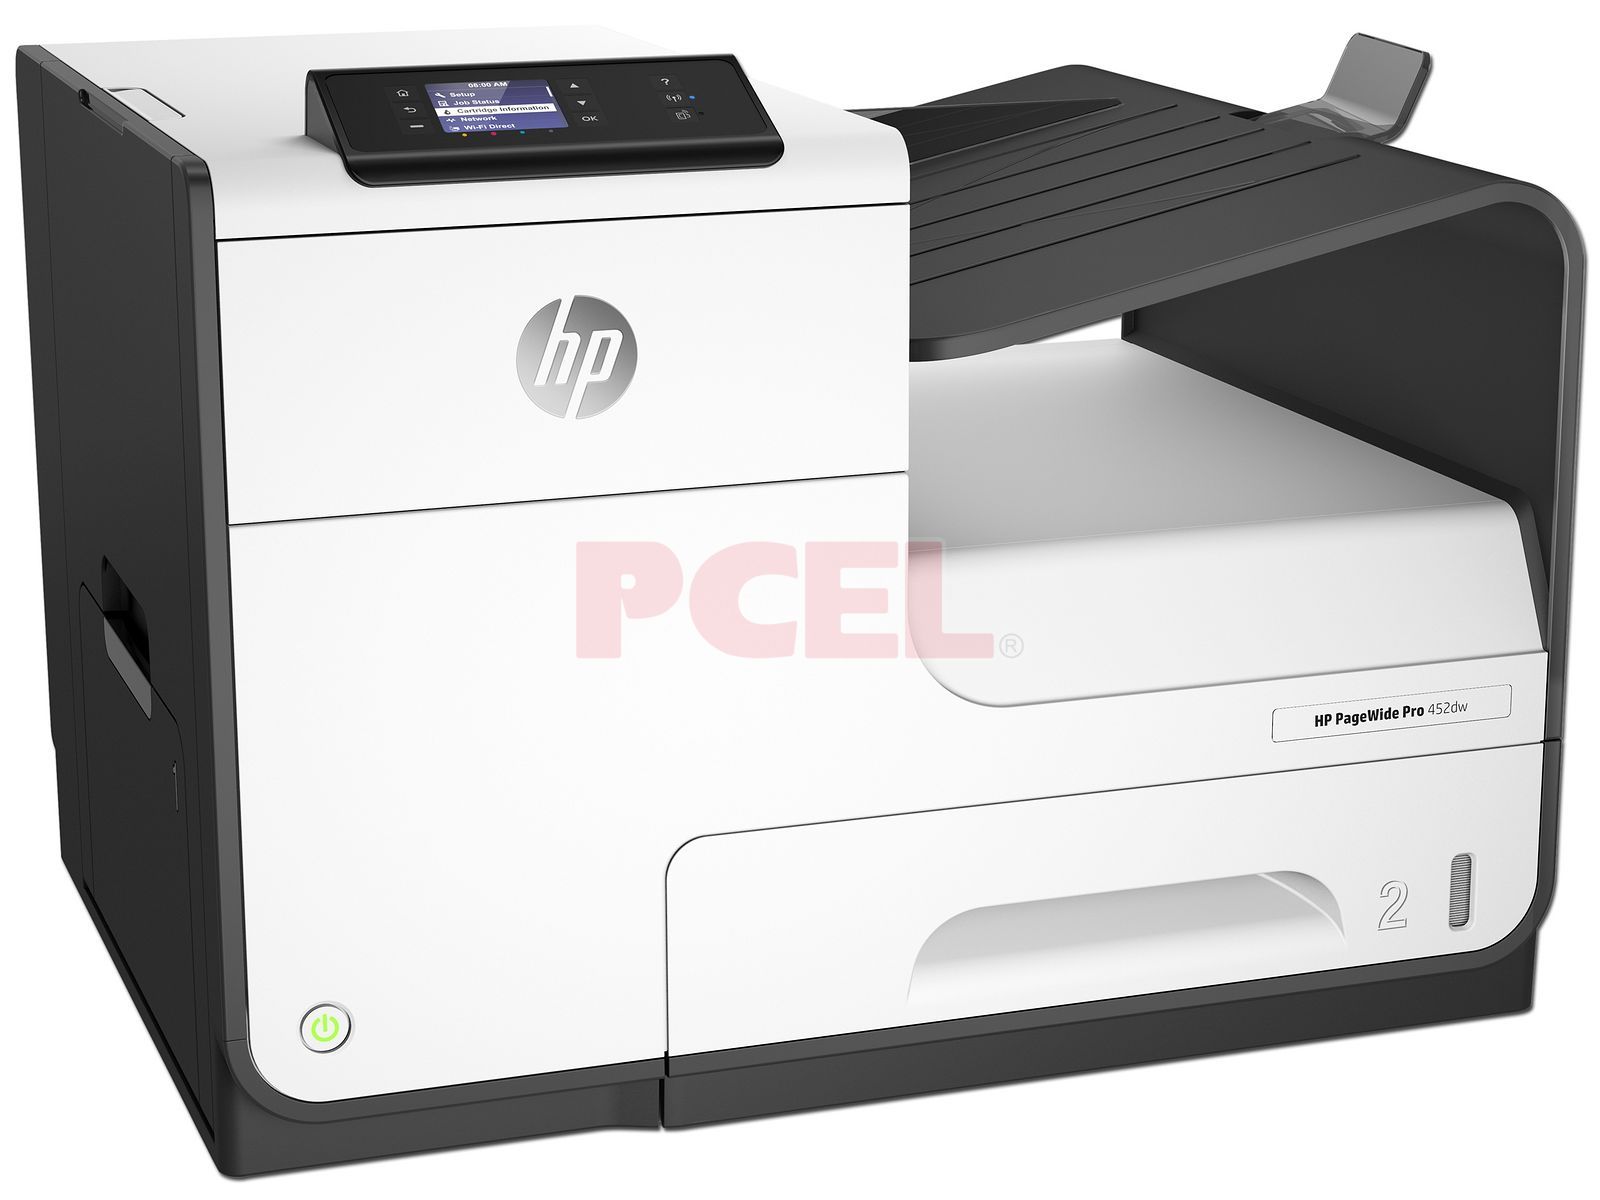  Impresora HP - Color - Dúplex - Página Amplia Arregla - A3/Ledger  - 1200 x 1200 dpi - hasta 75 ppm (mono) / hasta 75 ppm (color) - Capacidad:  650 hojas - USB 2.0, Gigabit LAN, USB 2.0 Host : Productos de Oficina